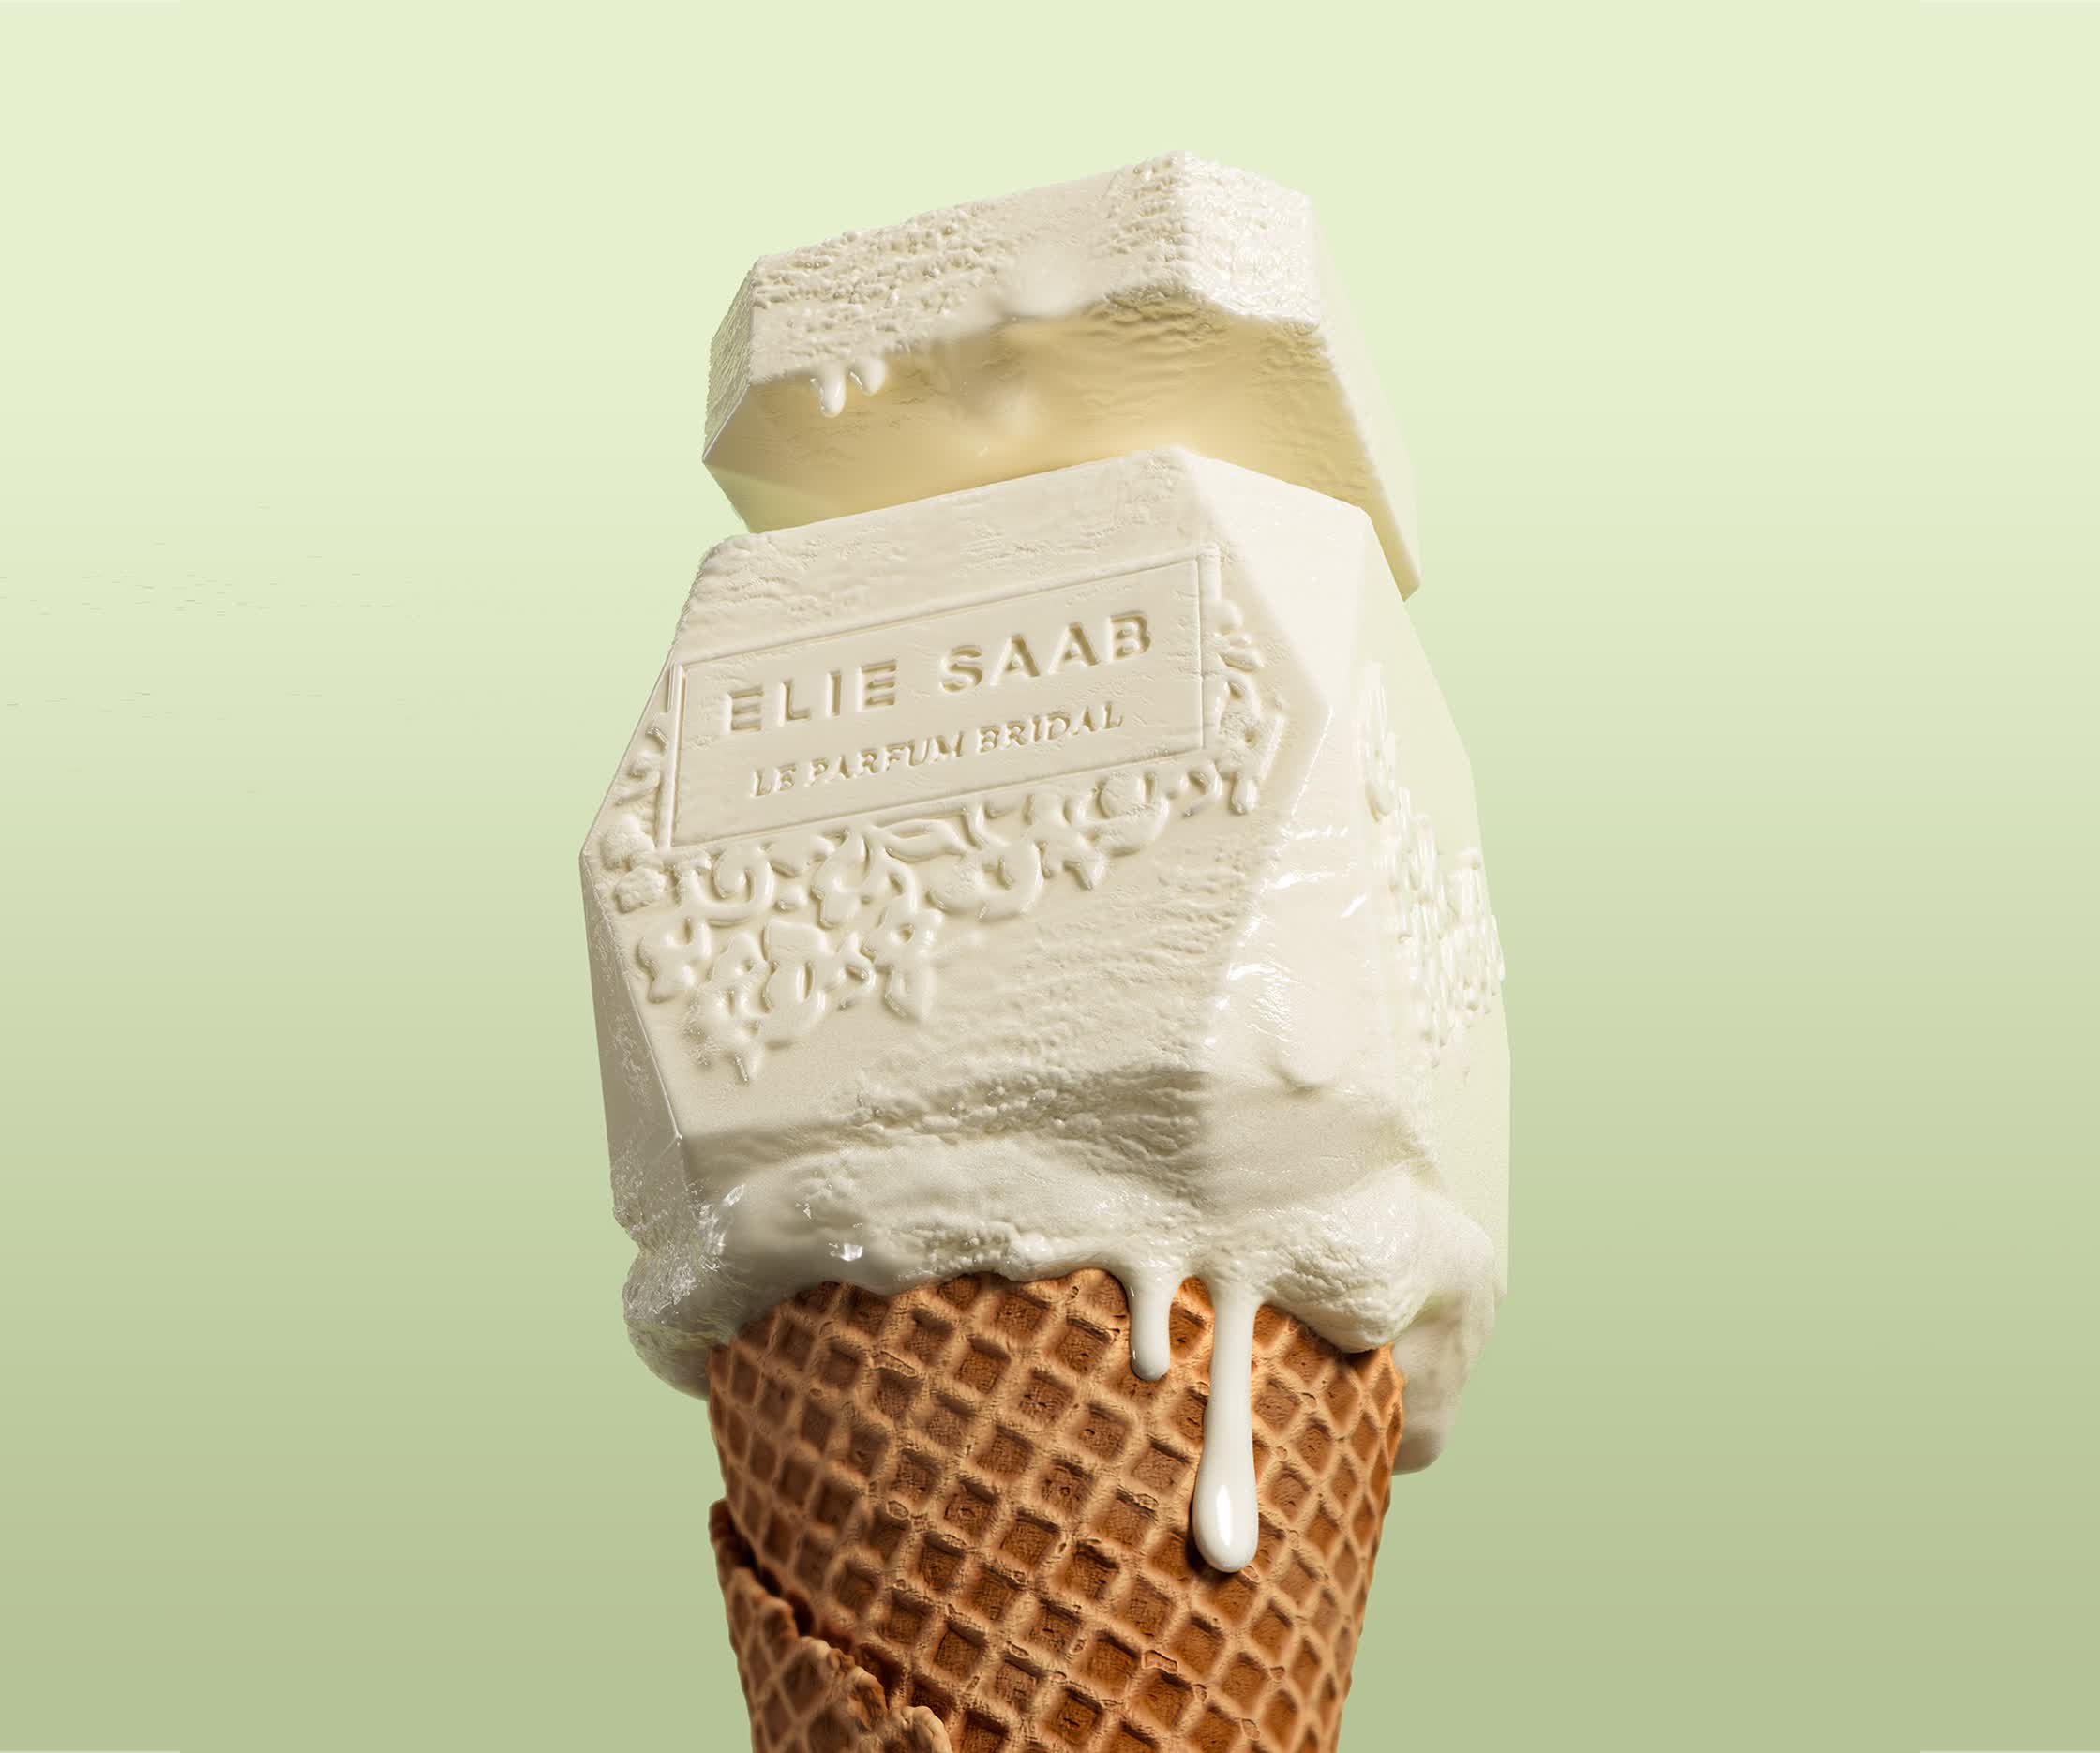 Elie Saab perfume ice cream cone wider crop.jpg